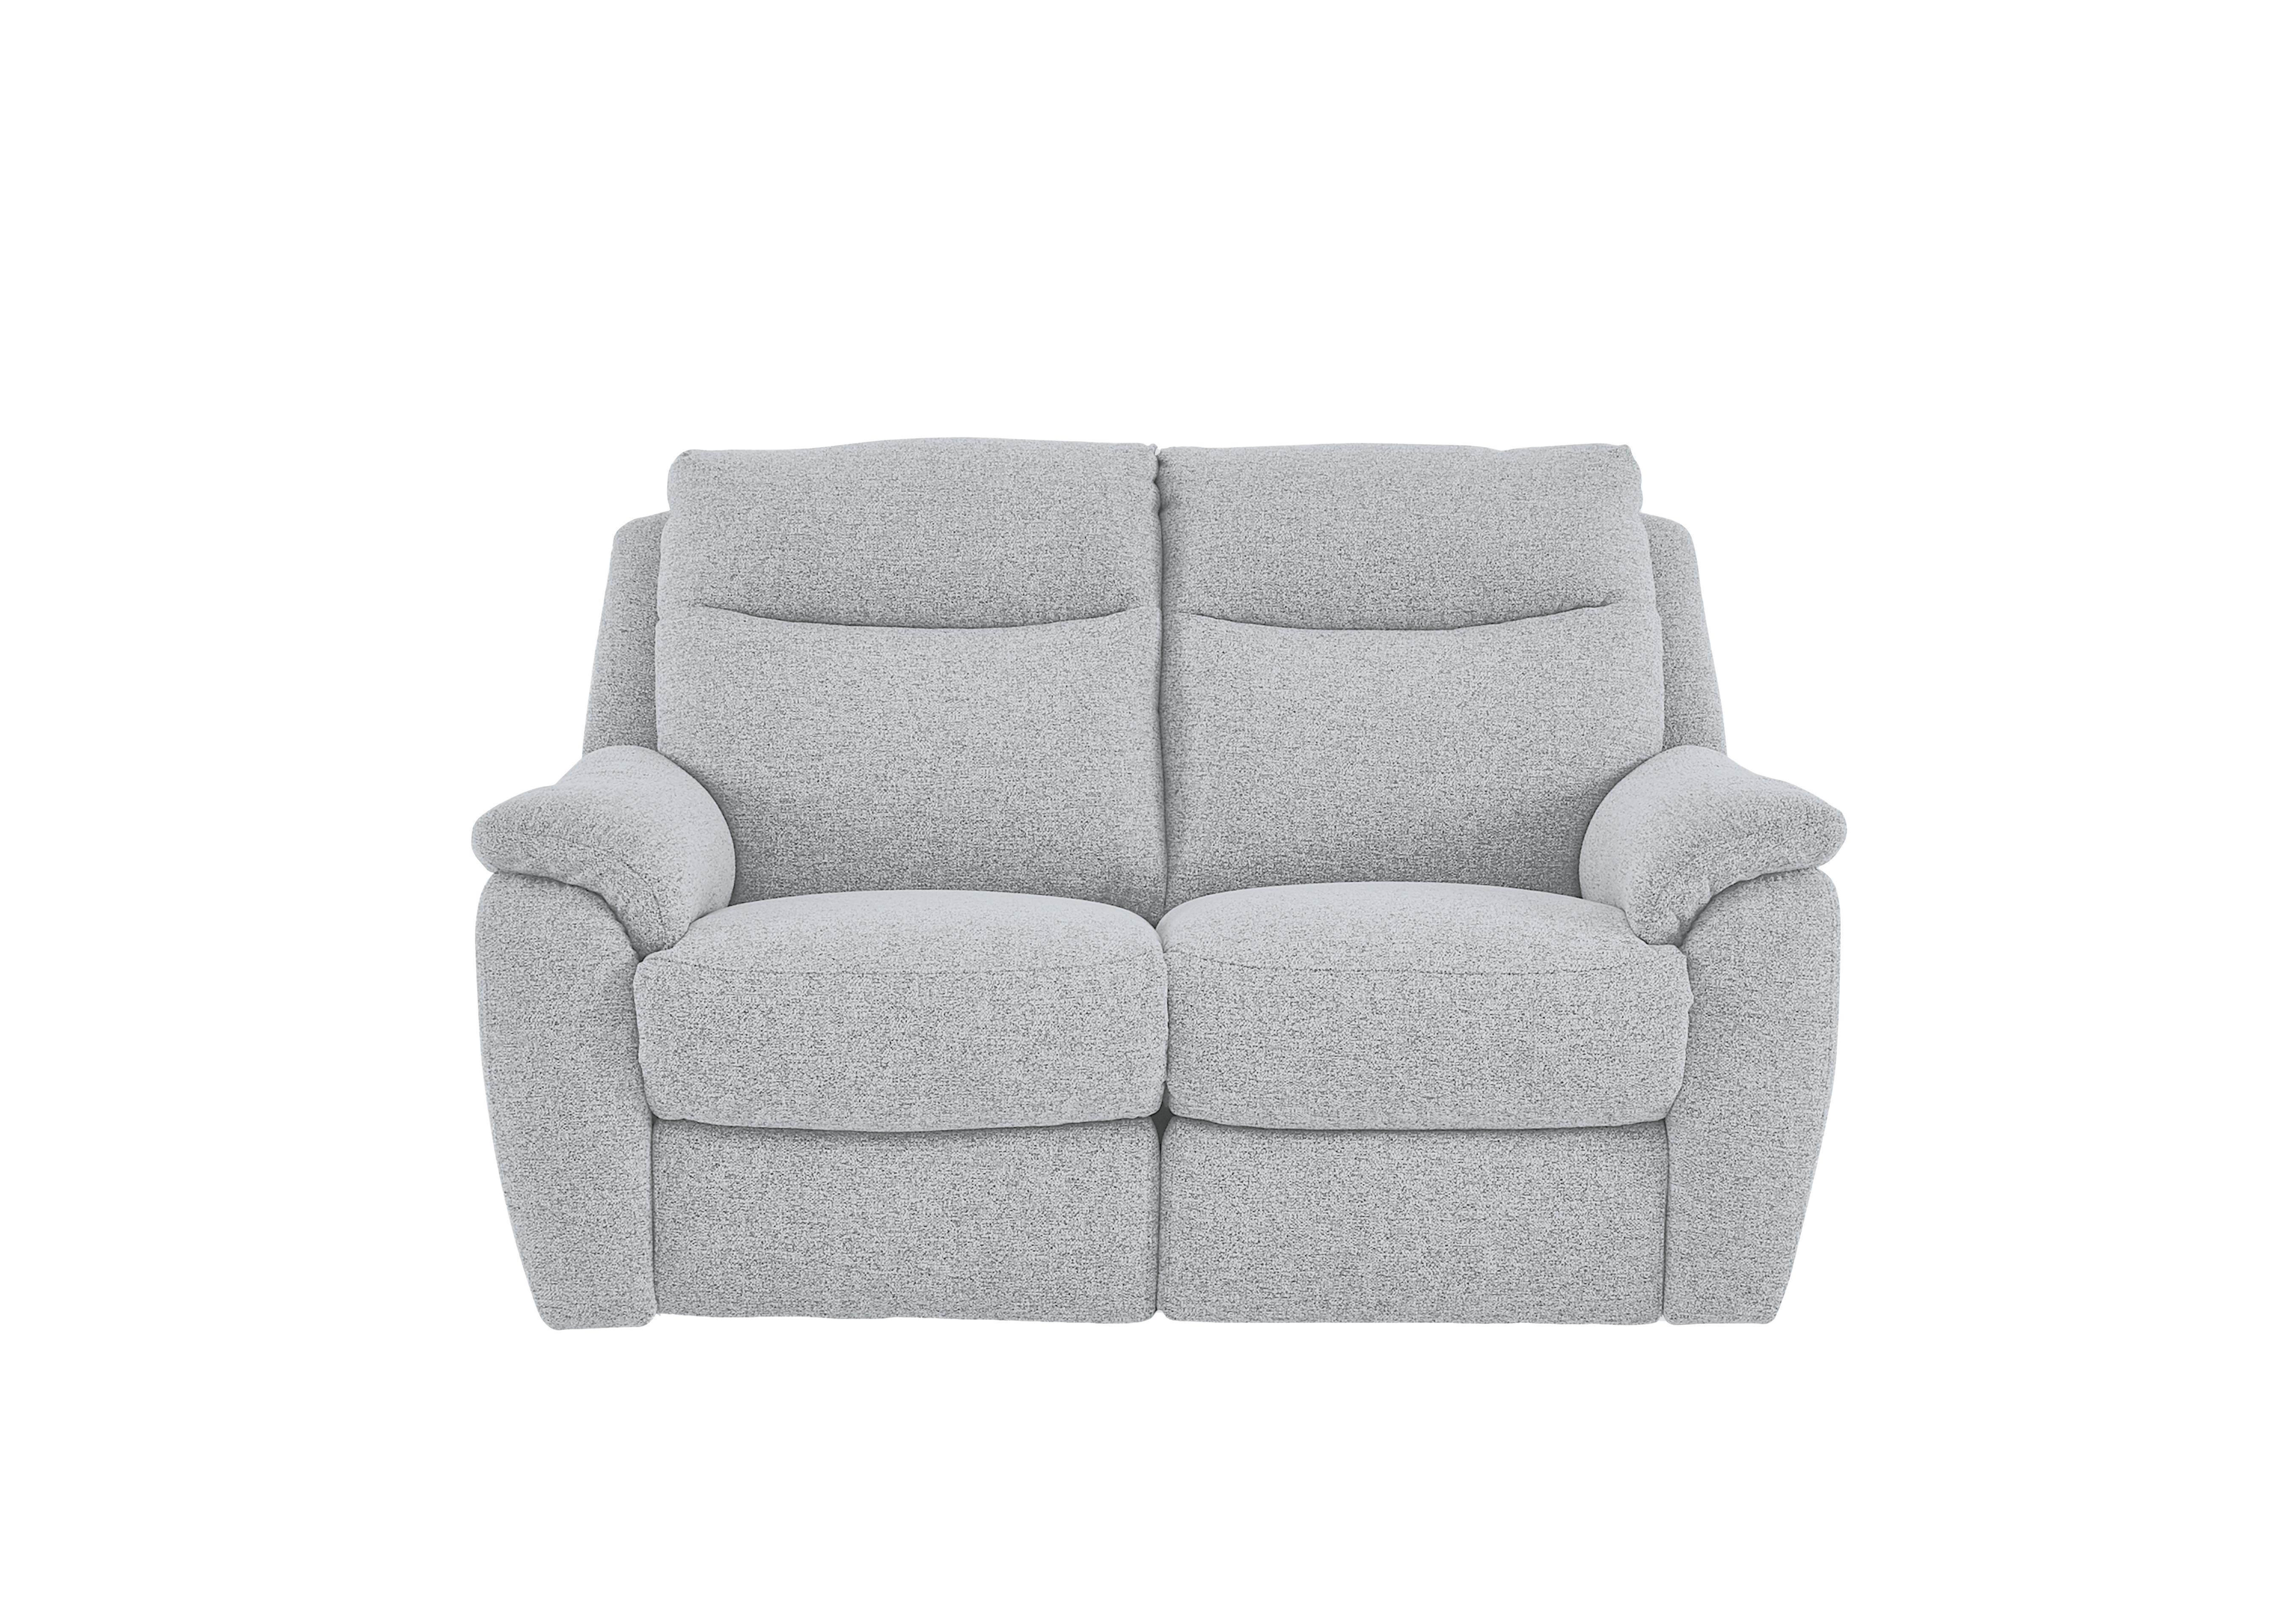 Snug 2 Seater Fabric Sofa in Fab-Chl-R21 Frost on Furniture Village